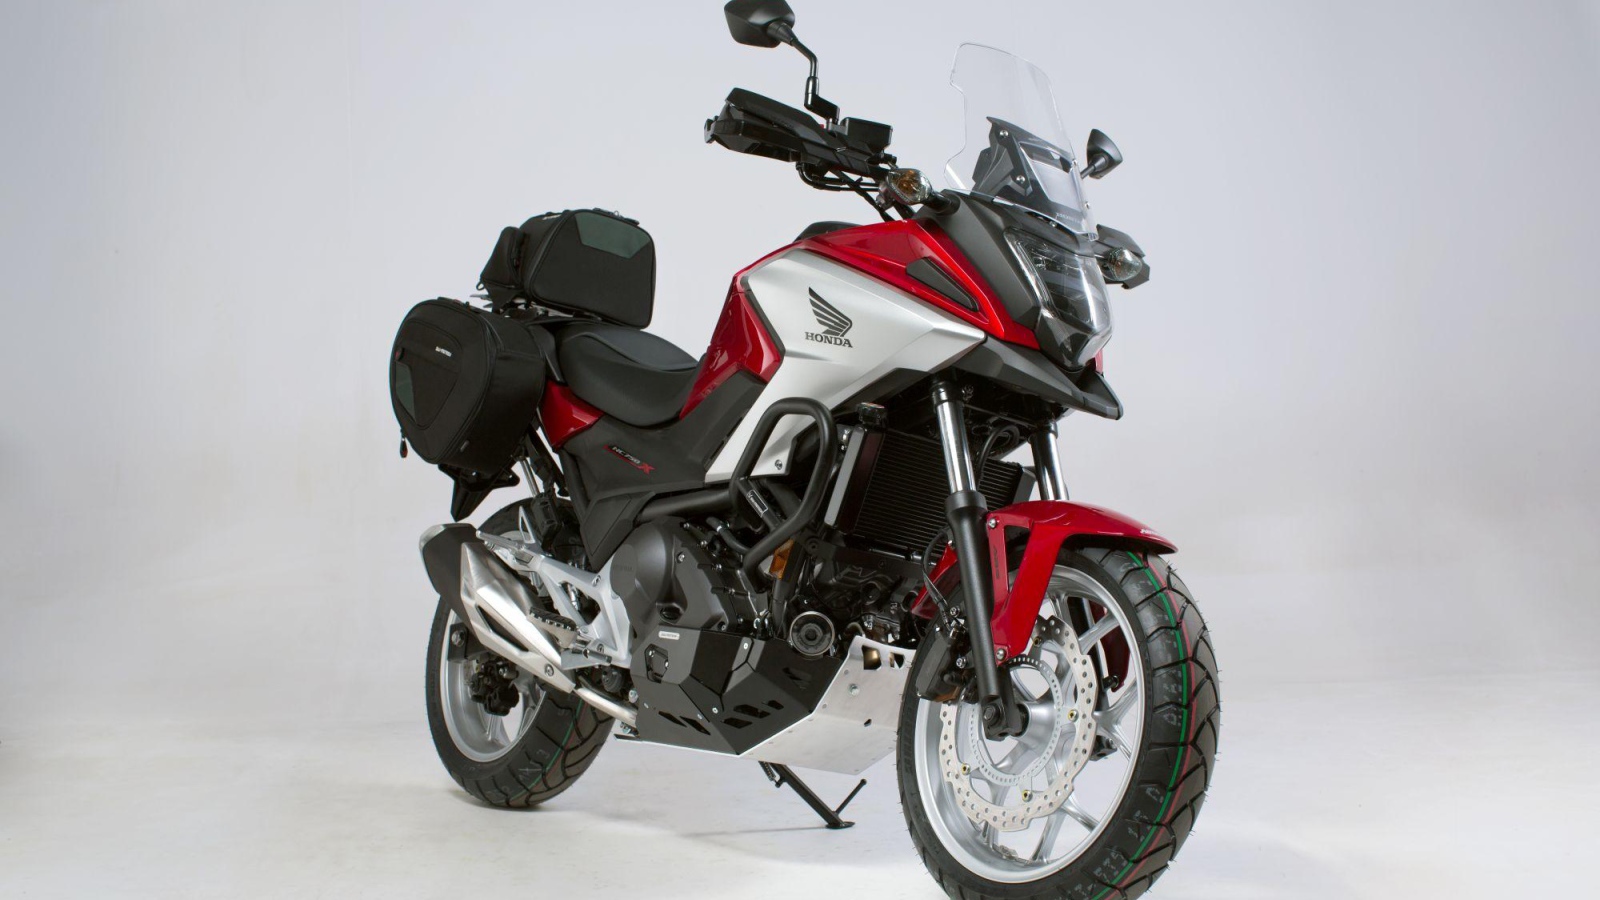 Мотоцикл Honda NC750X, 2021 года на сером фоне